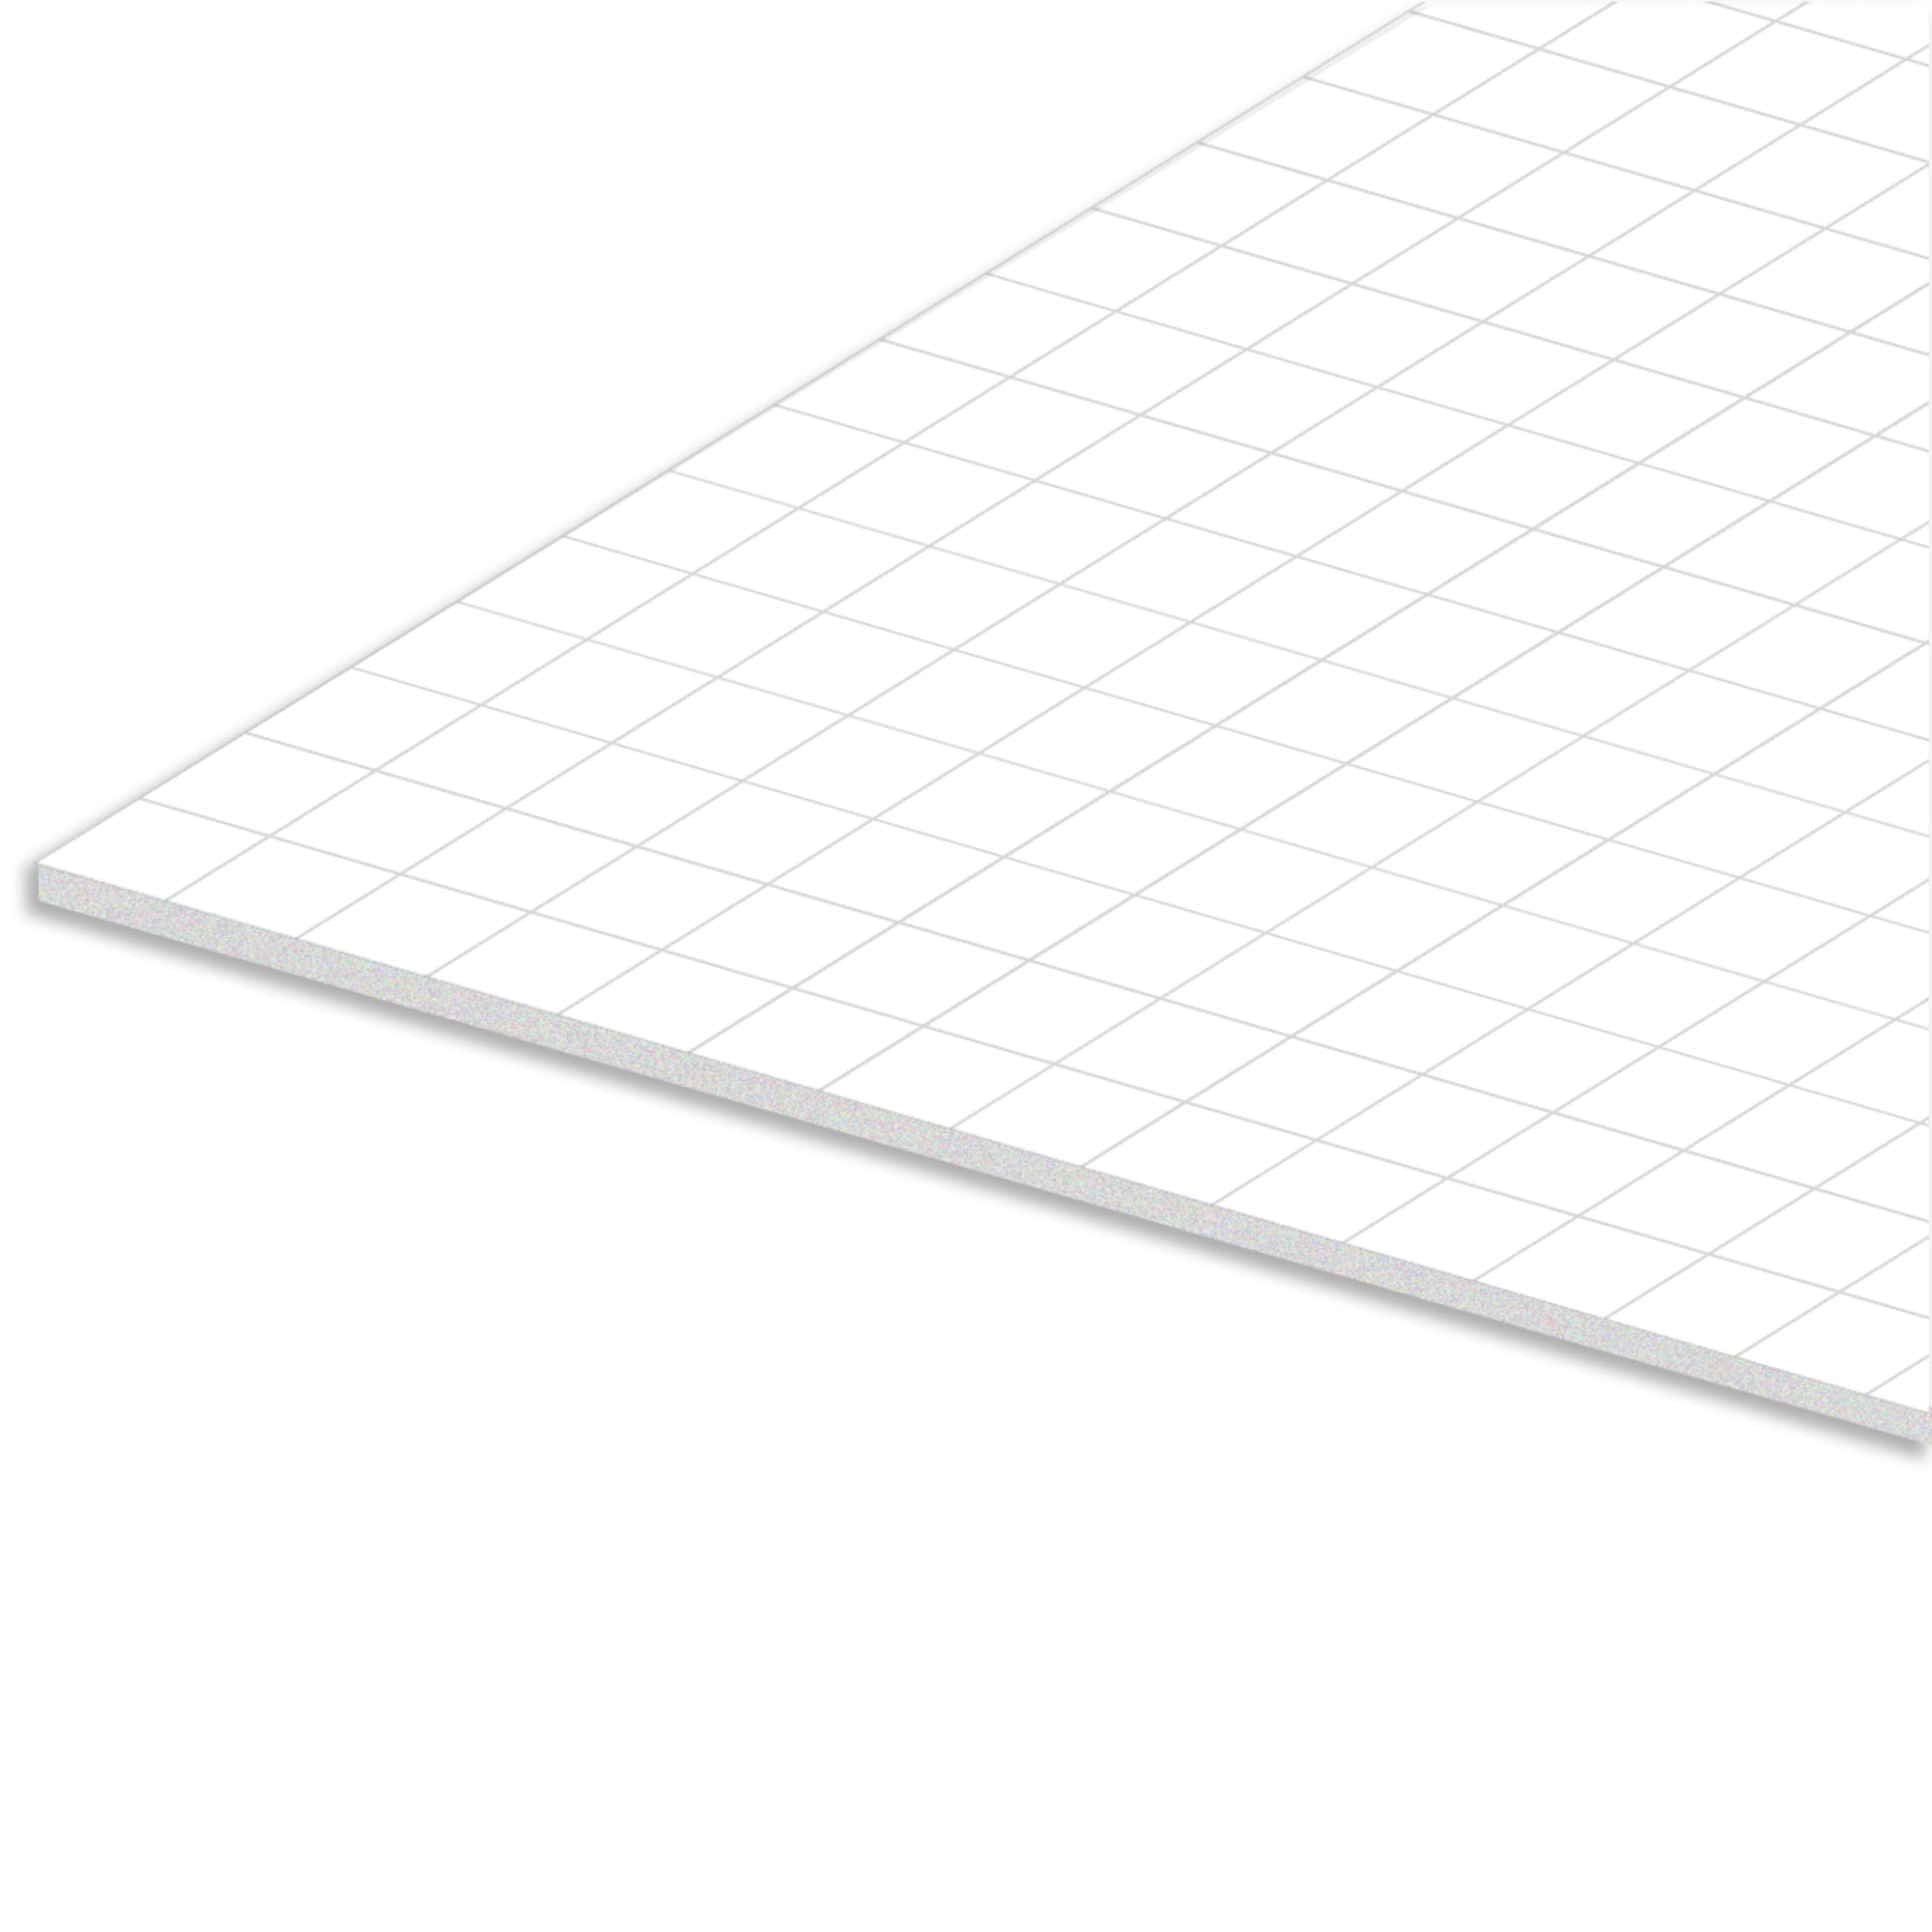 Ghostline Foam Board - White, 22 x 28 in - Ralphs